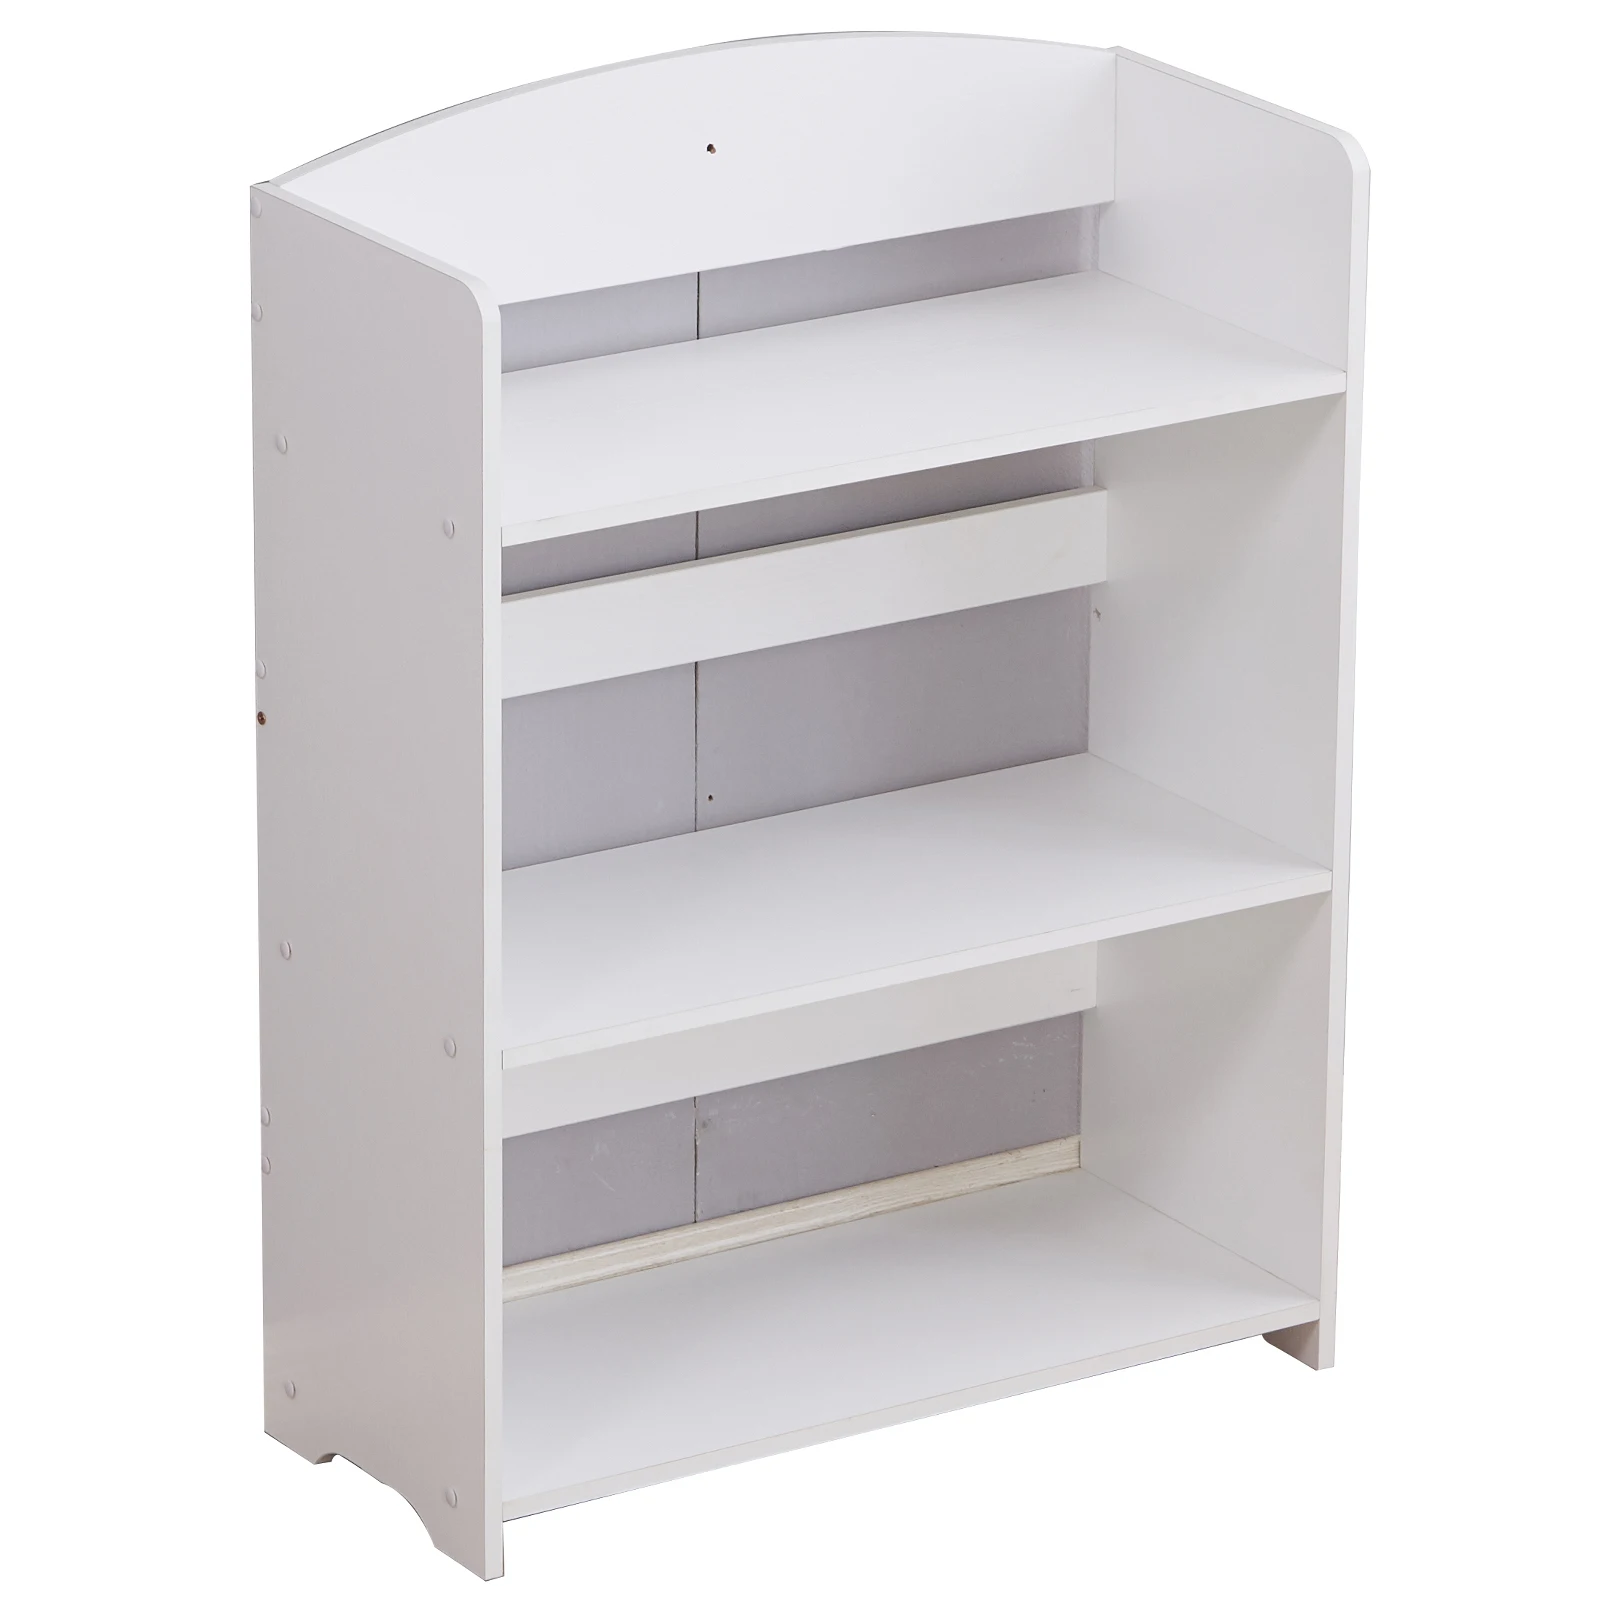 Wooden 4 Tier Storage Unit Display Standing Bathroom Shelf， Bookshelf Display Rack Bookcase Storage White